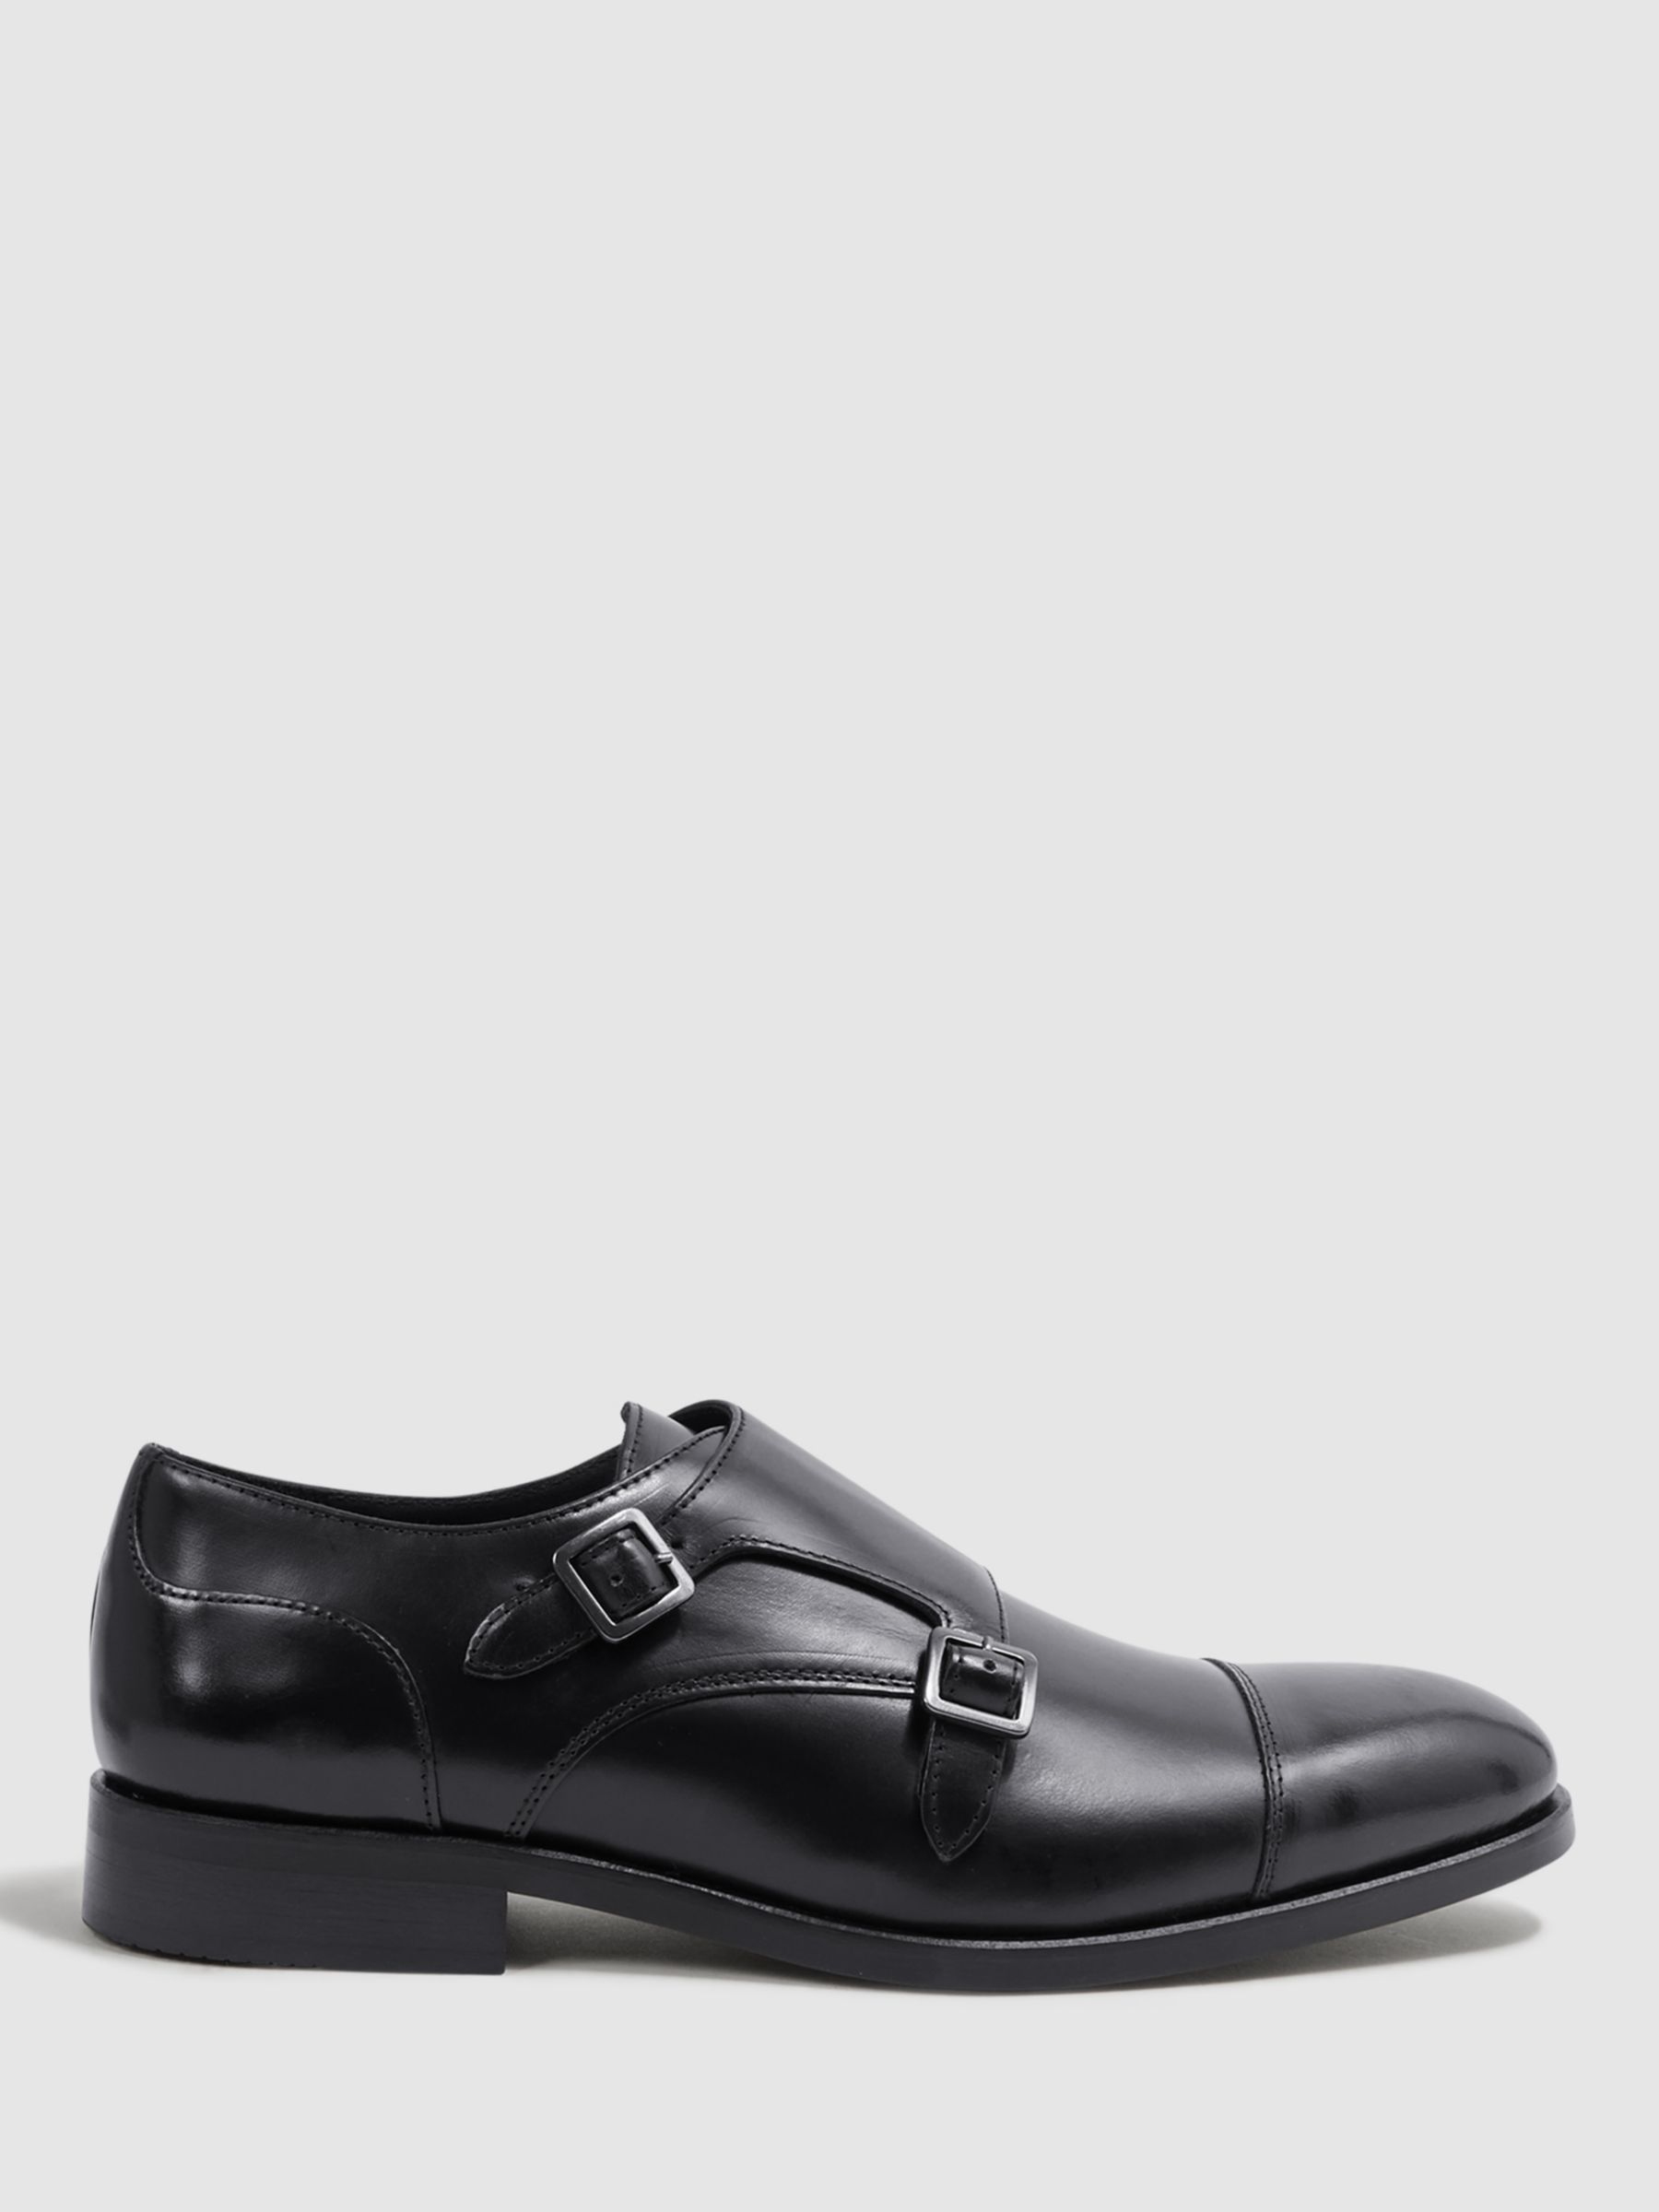 Reiss Rivington Double Monk Shoes, Black/Gunmetal at John Lewis & Partners